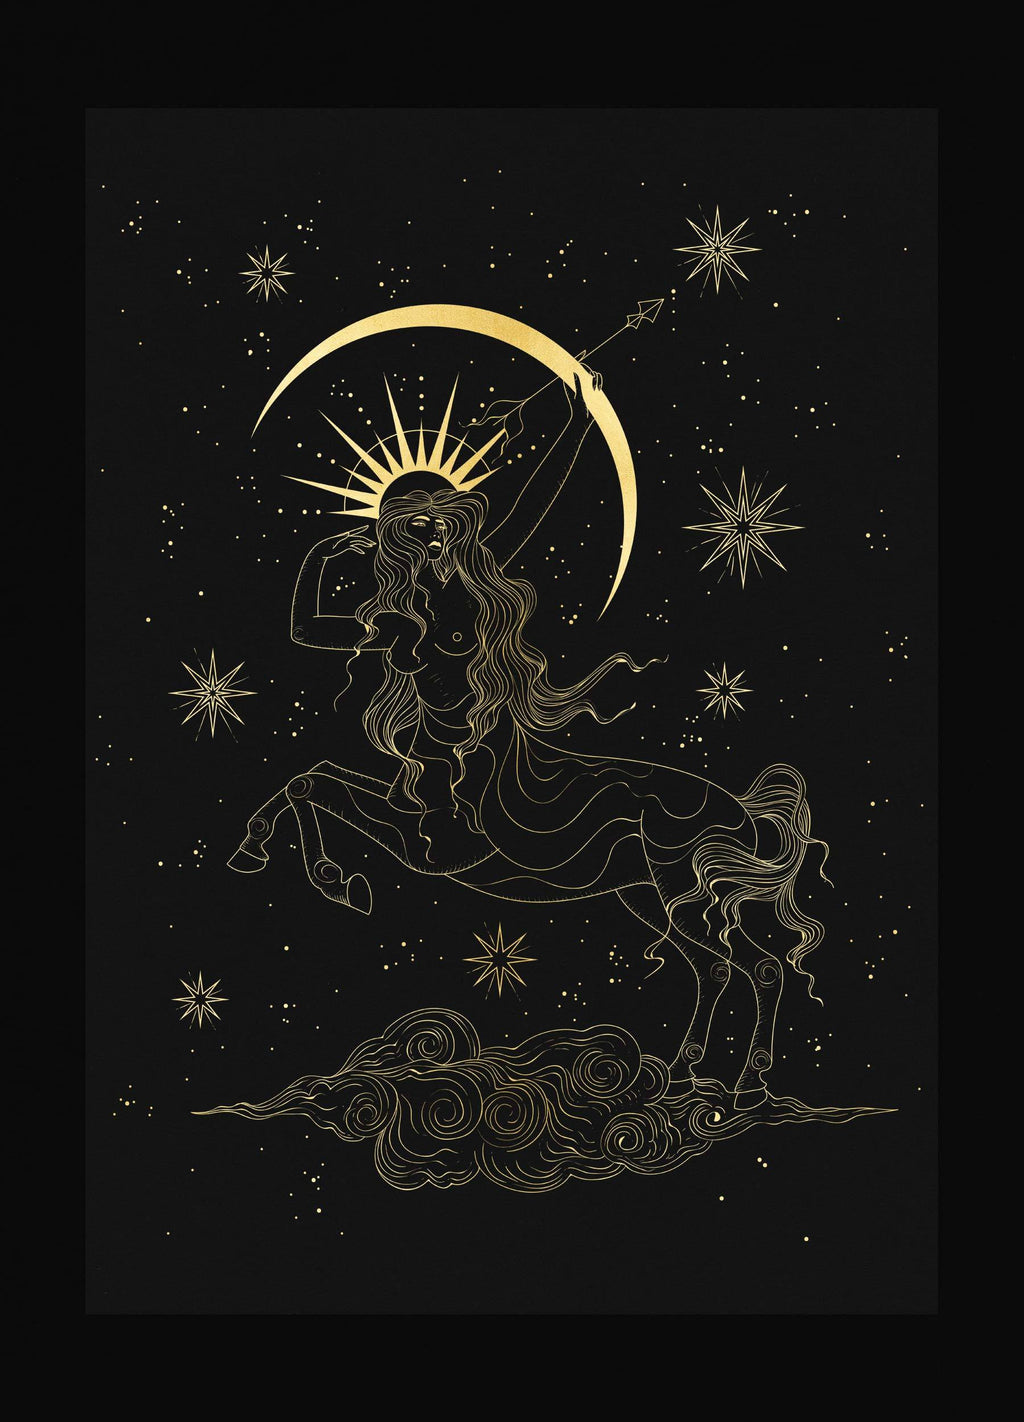 Sagittarius Goddess gold foil art print on black paper by Cocorrina & Co Design studio and shop